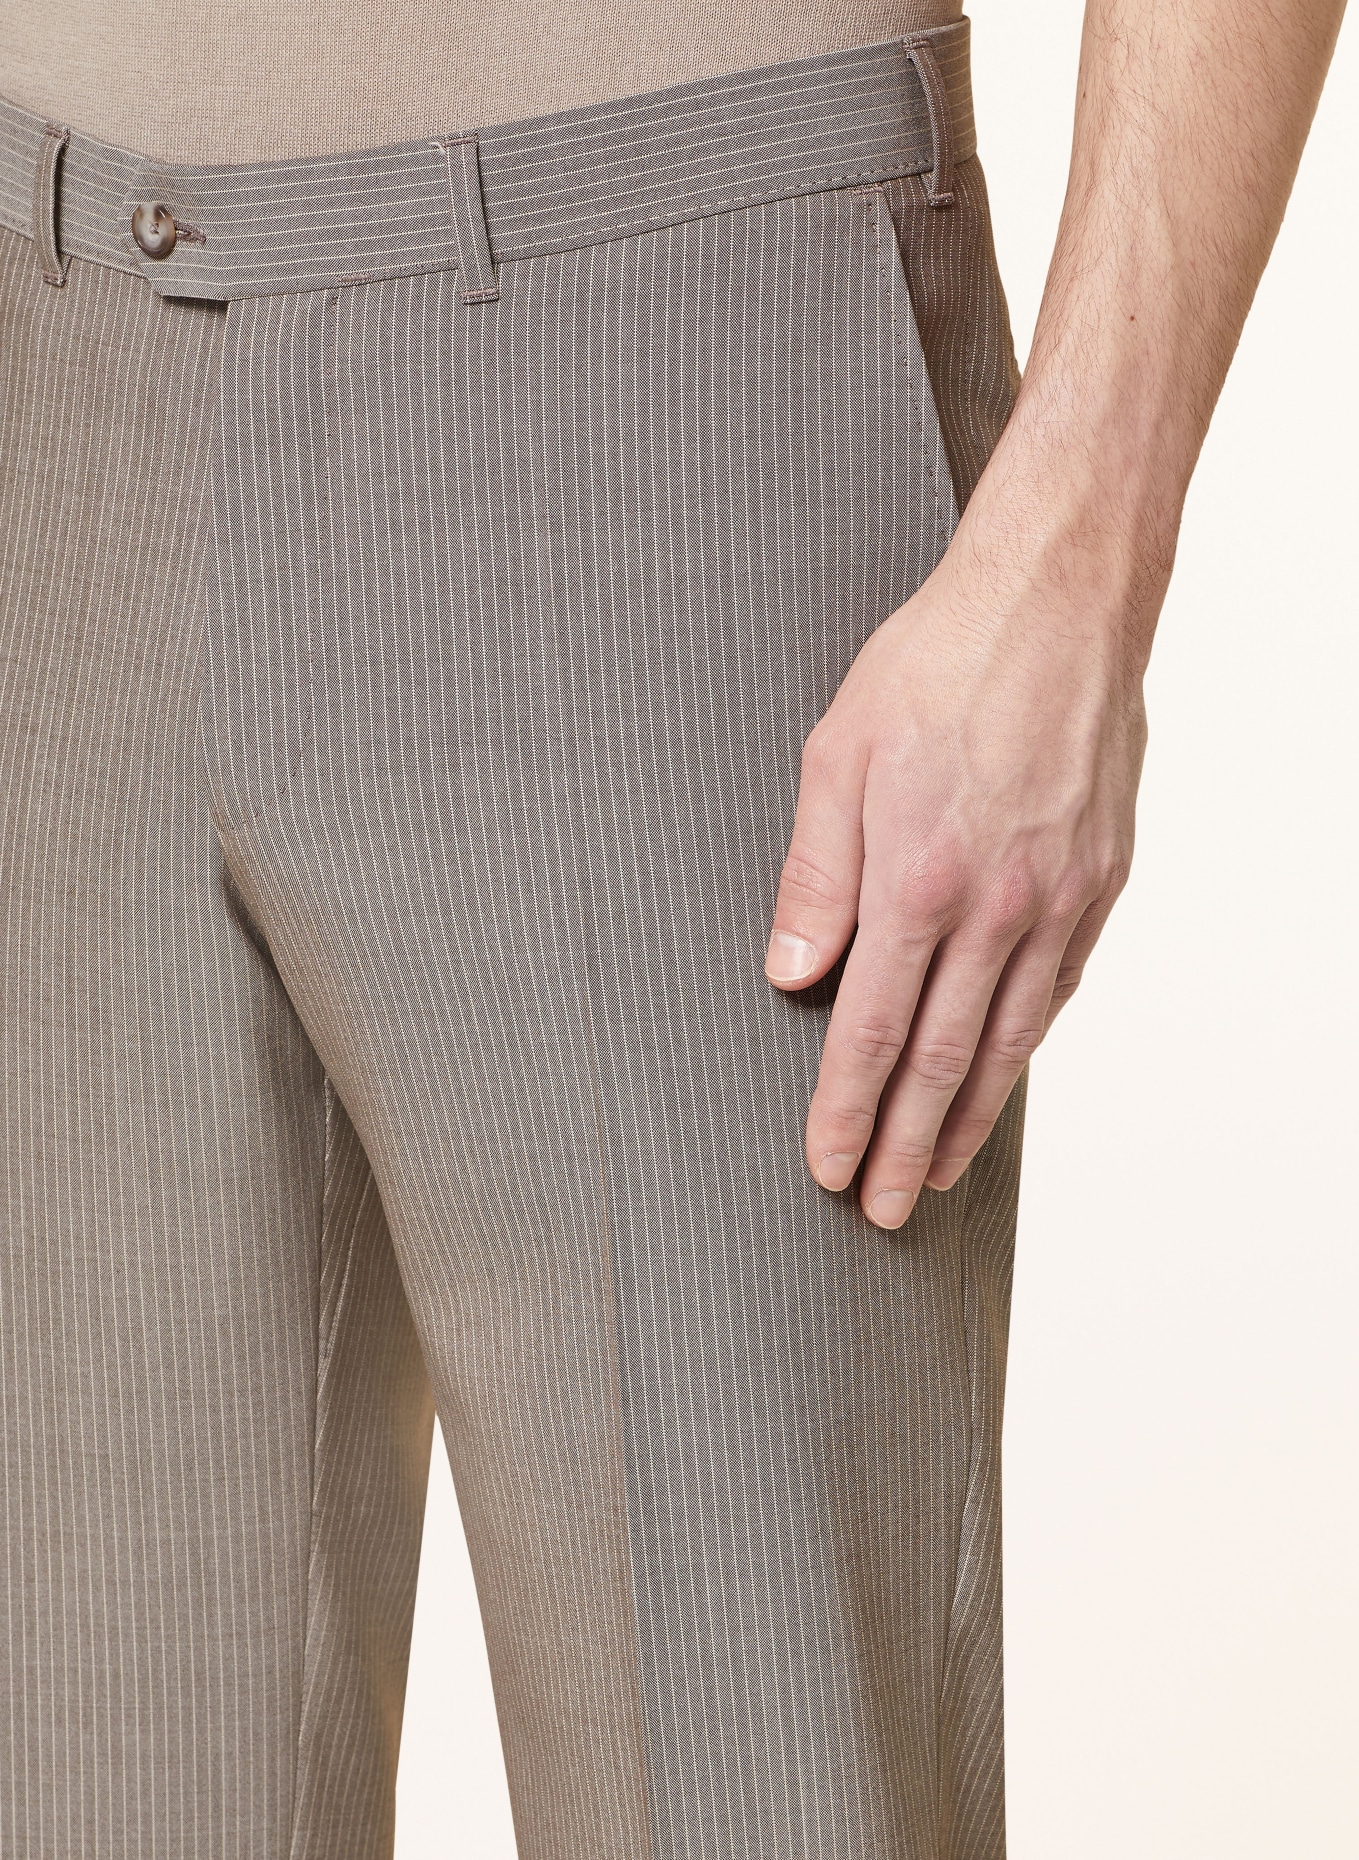 EDUARD DRESSLER Anzughose Slim Fit, Farbe: 074 BEIGE (Bild 6)